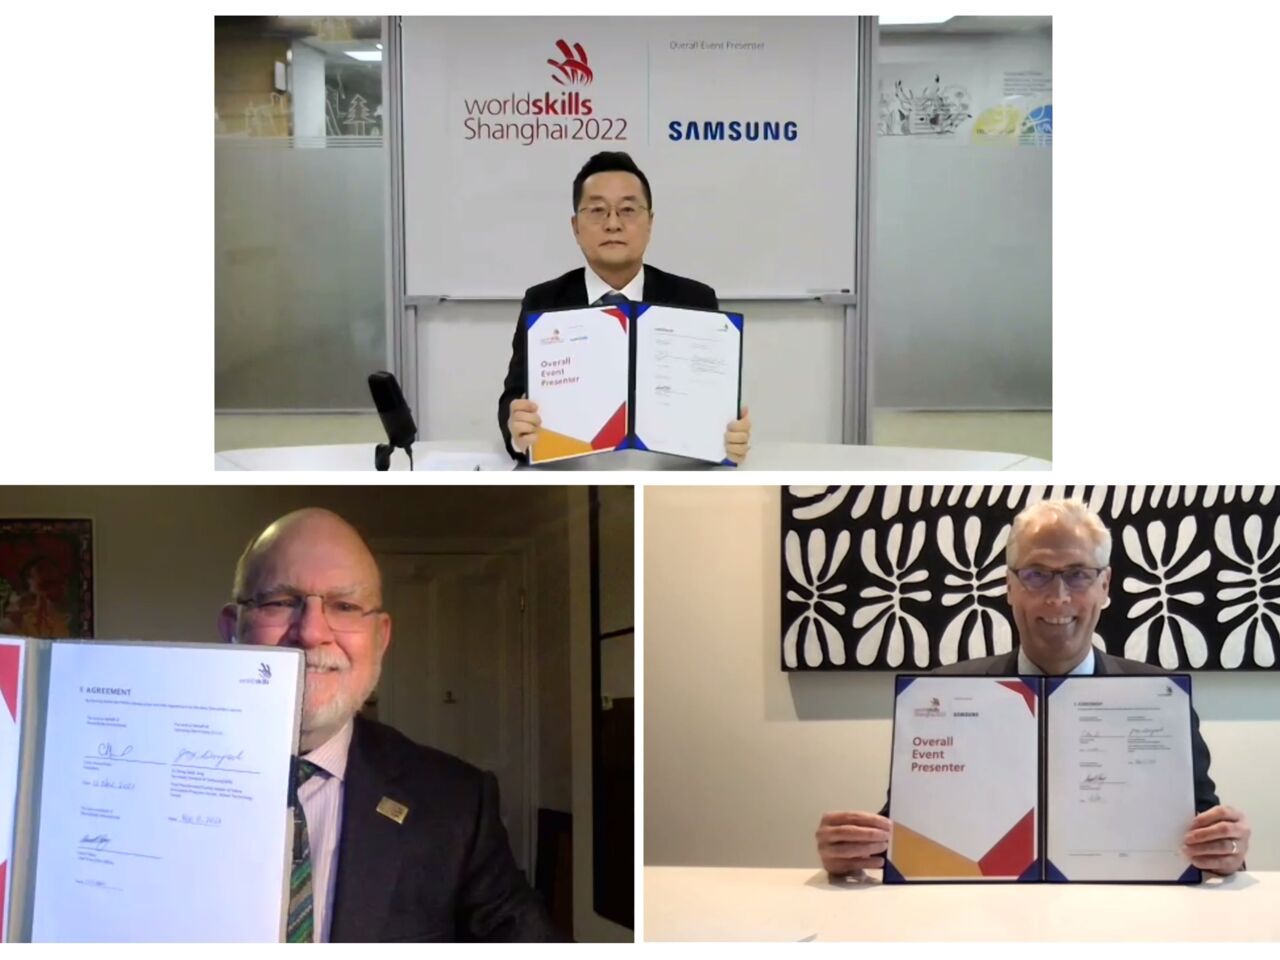 Samsung announced as Overall Event Presenter of WorldSkills Shanghai 2022 and Global Premium Partner